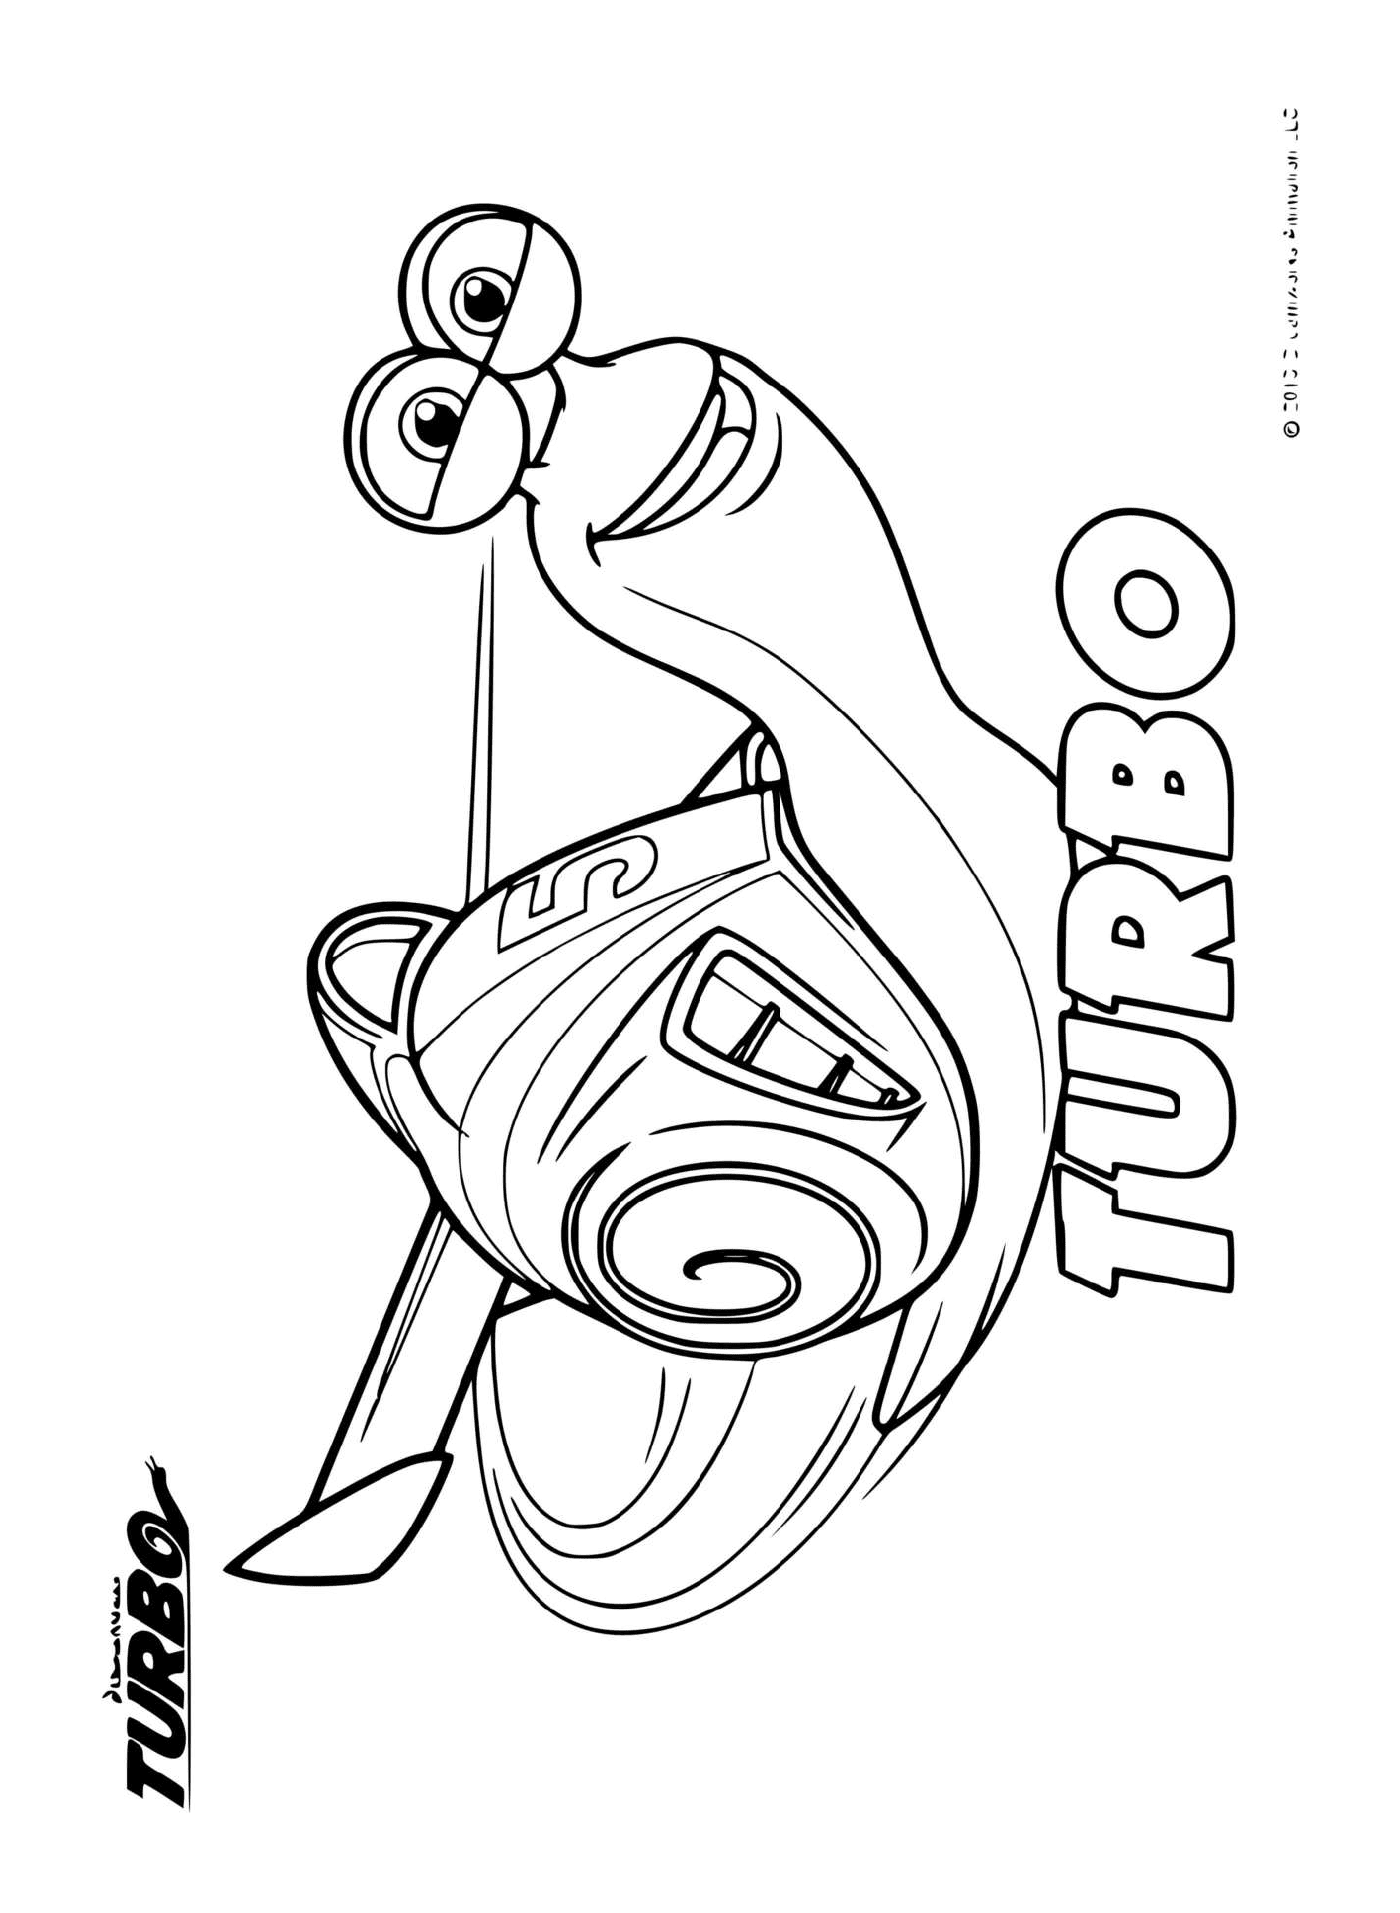  Turbo, lumaca veloce di Dreamworks 